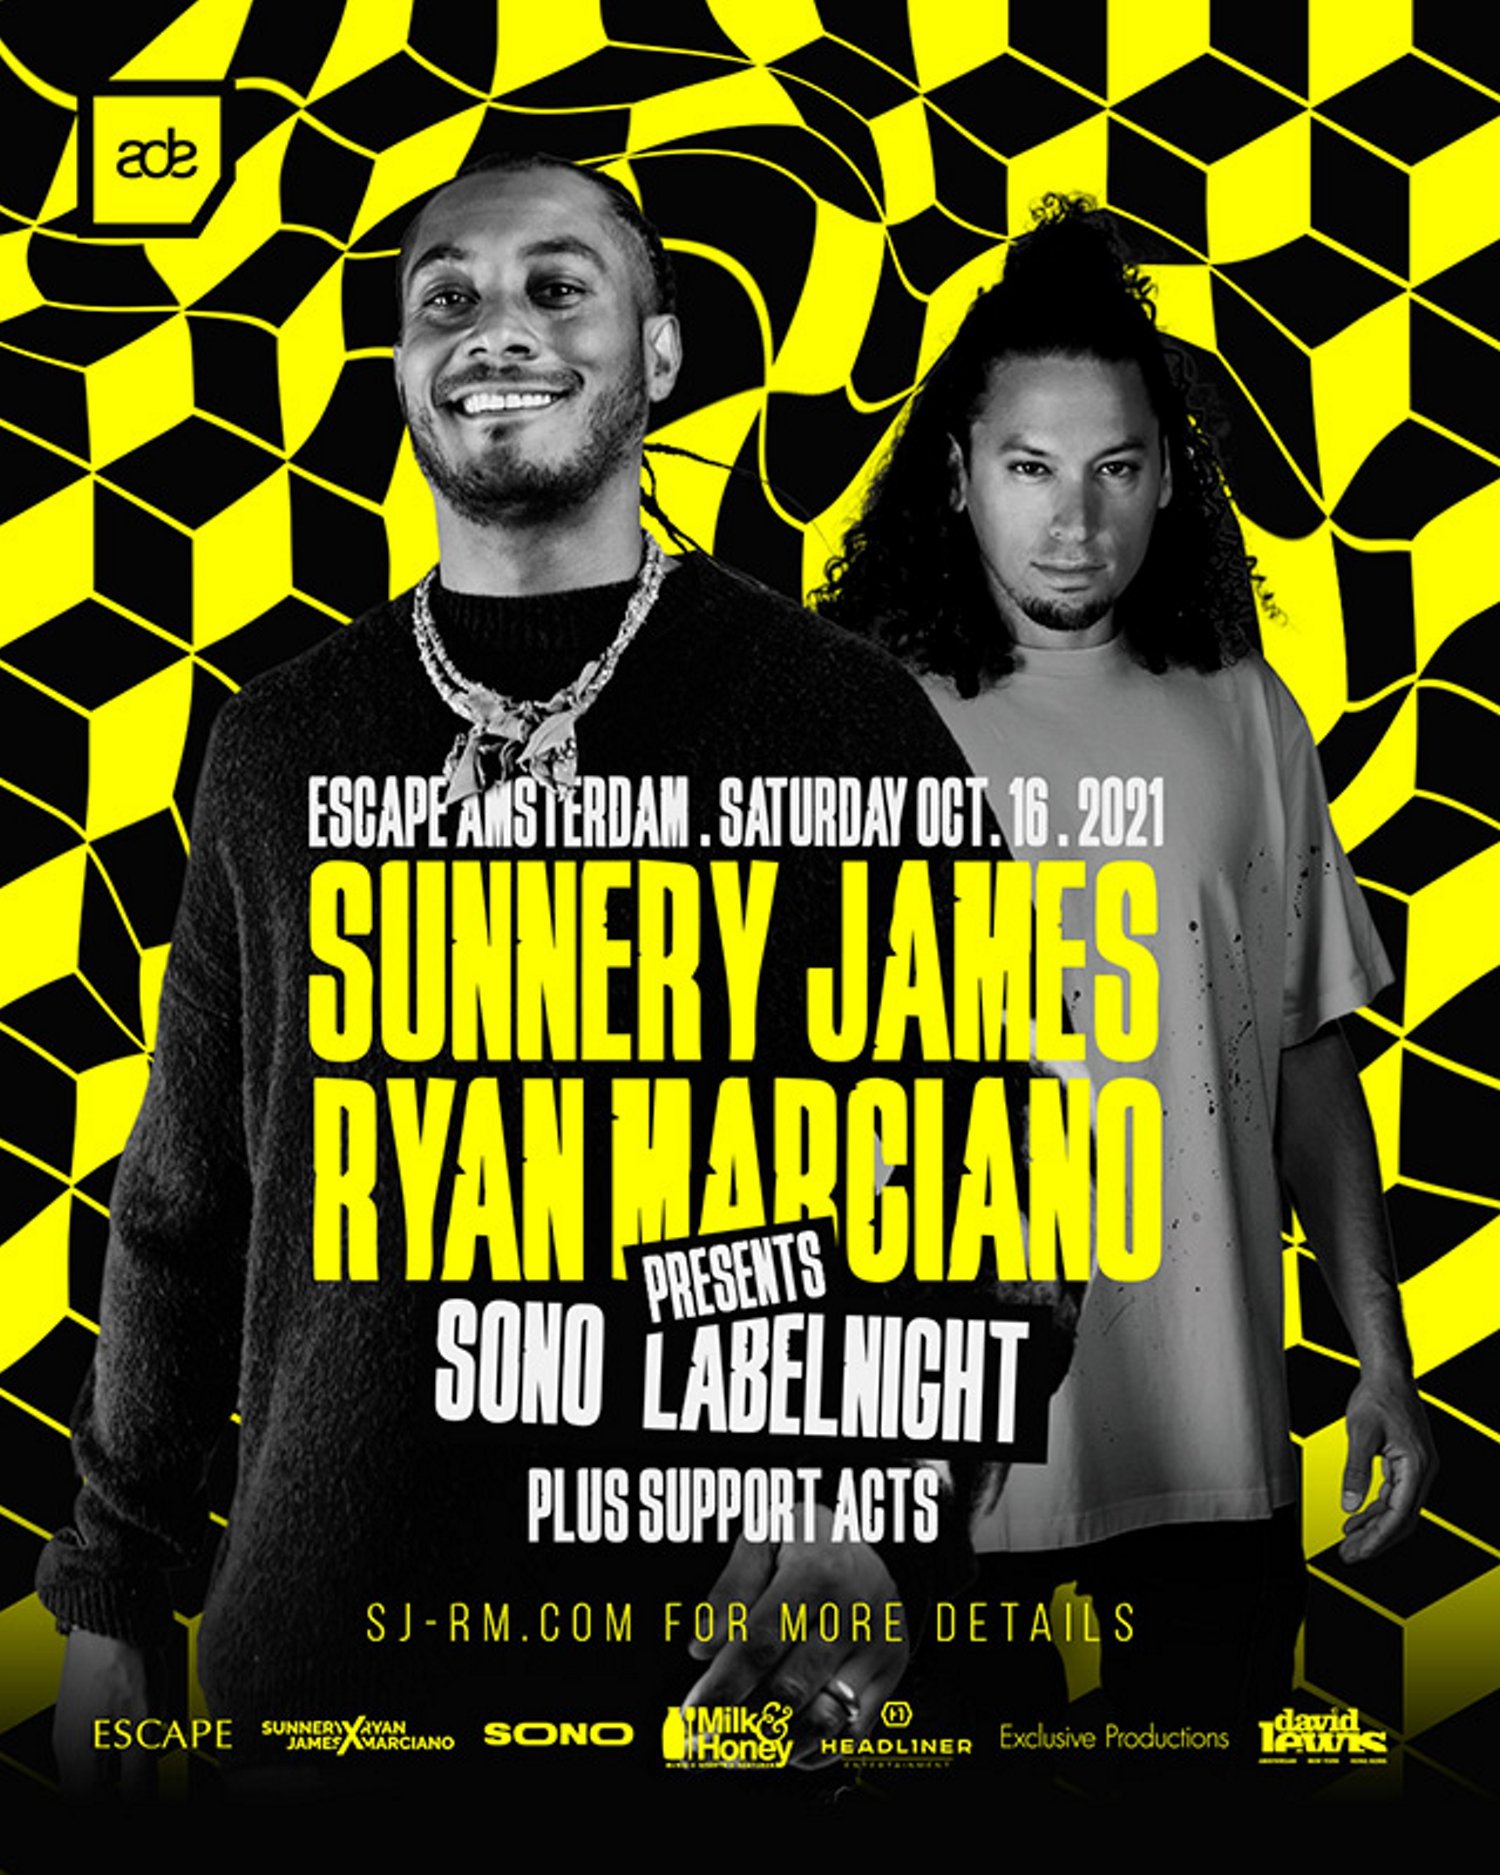 Sunnery James & Ryan Marciano present: Sono Label Night